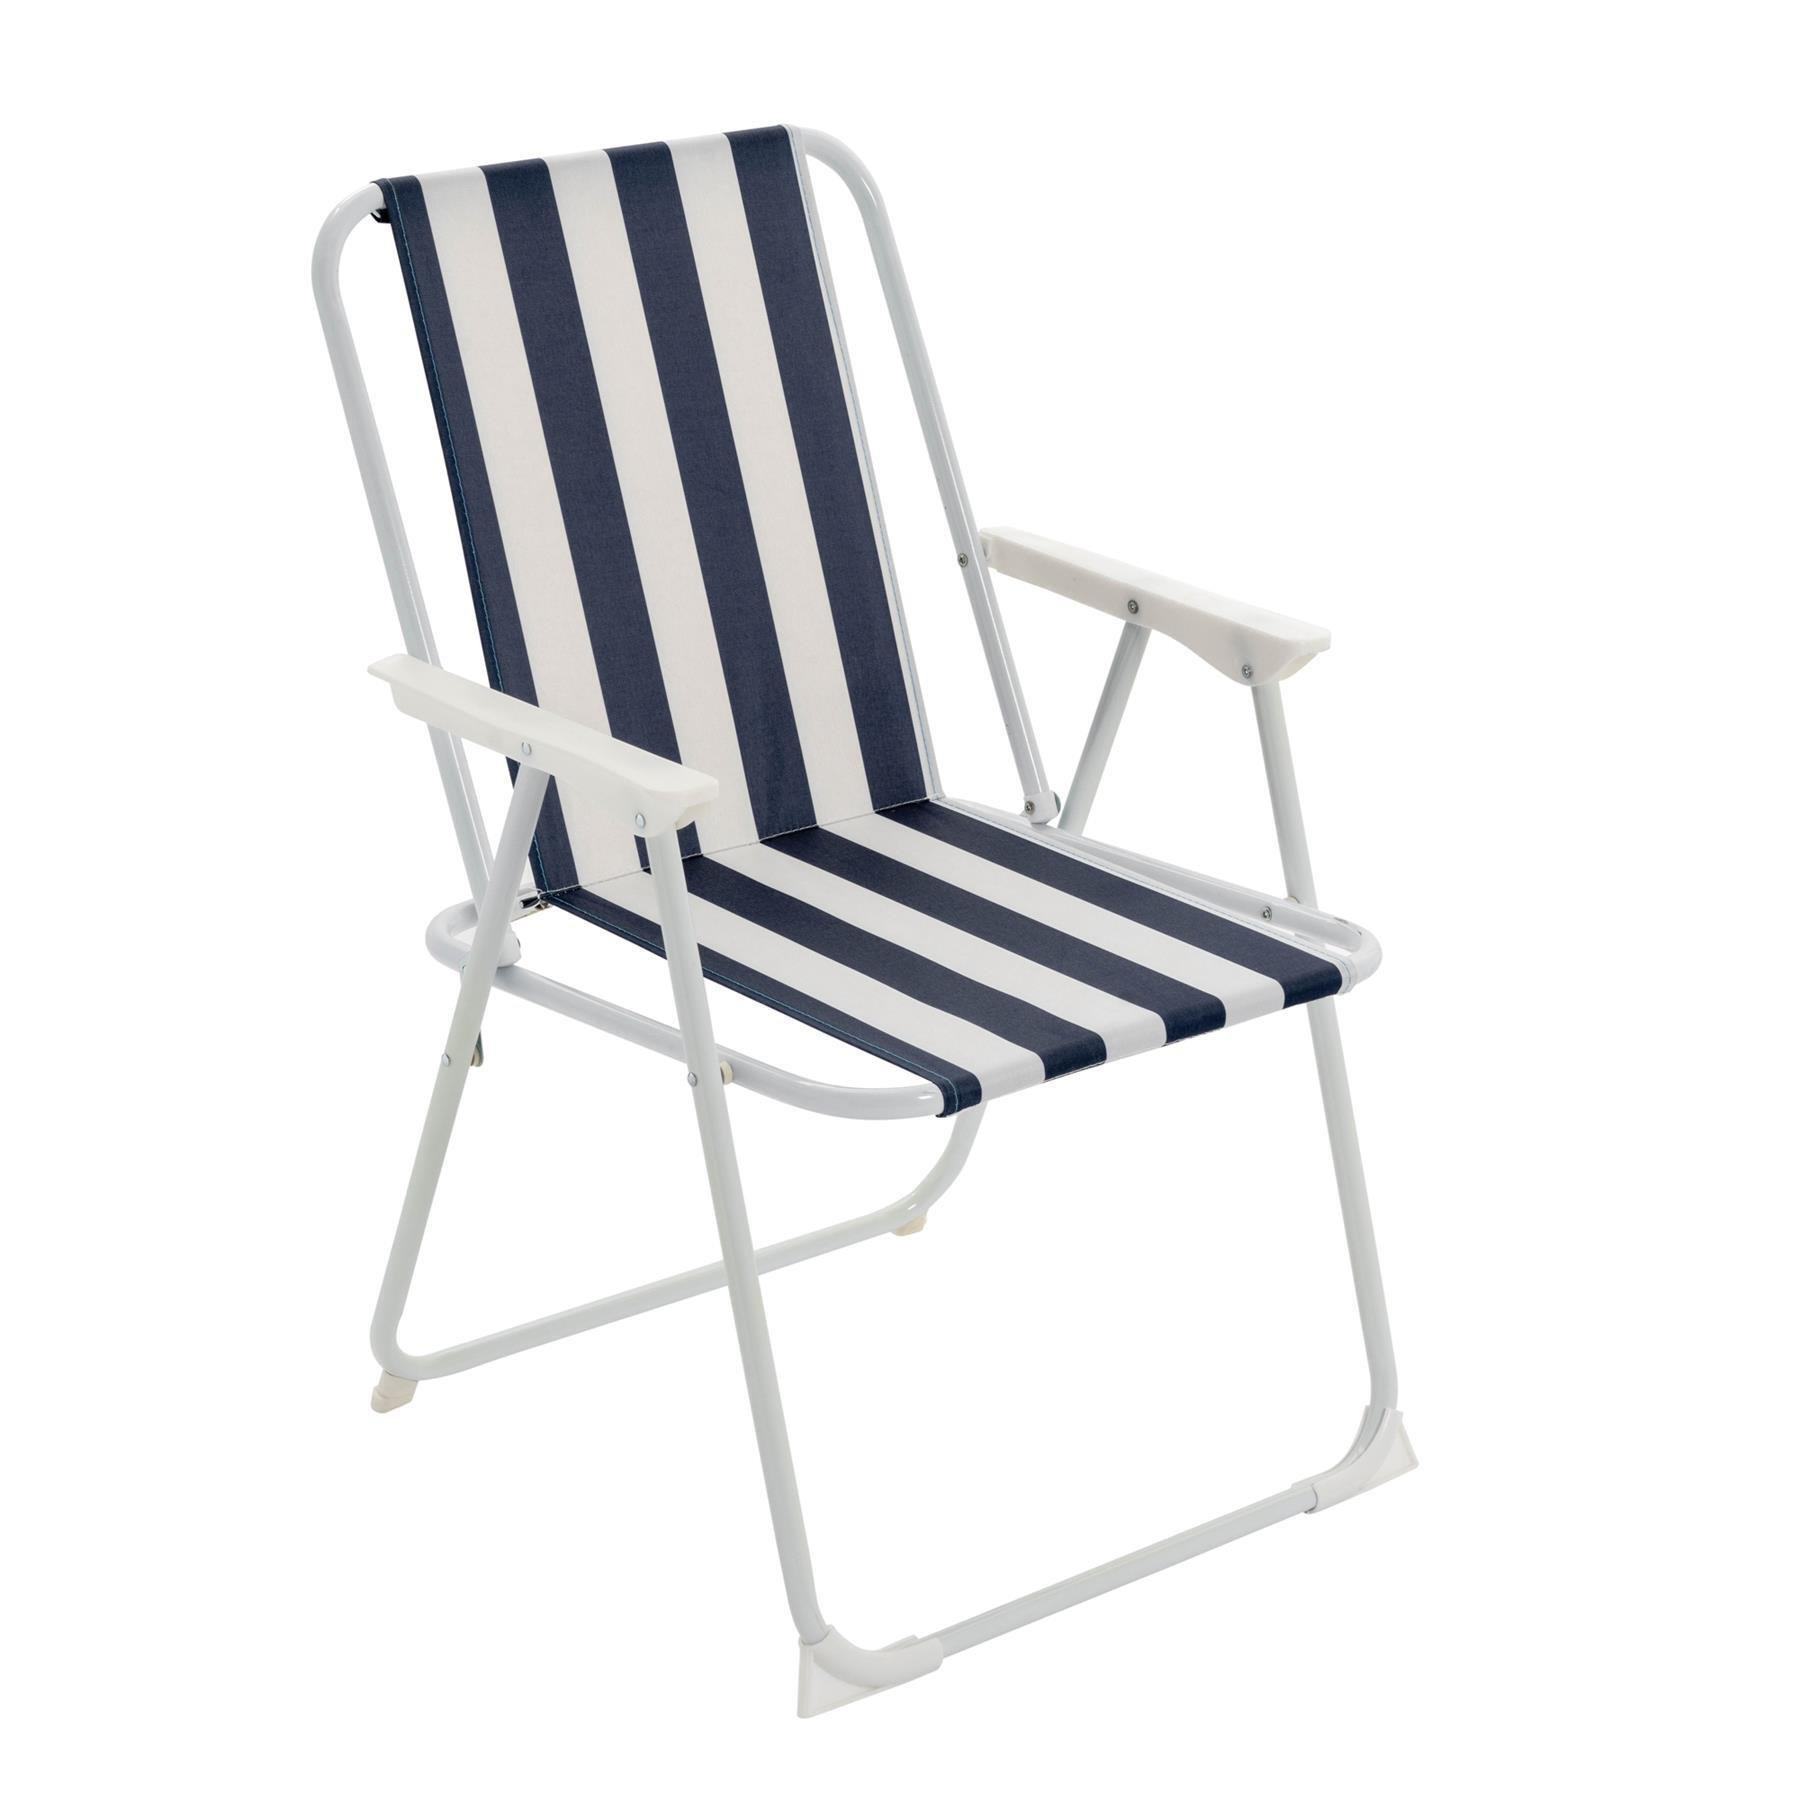 Folding Metal Beach Chair - image 1